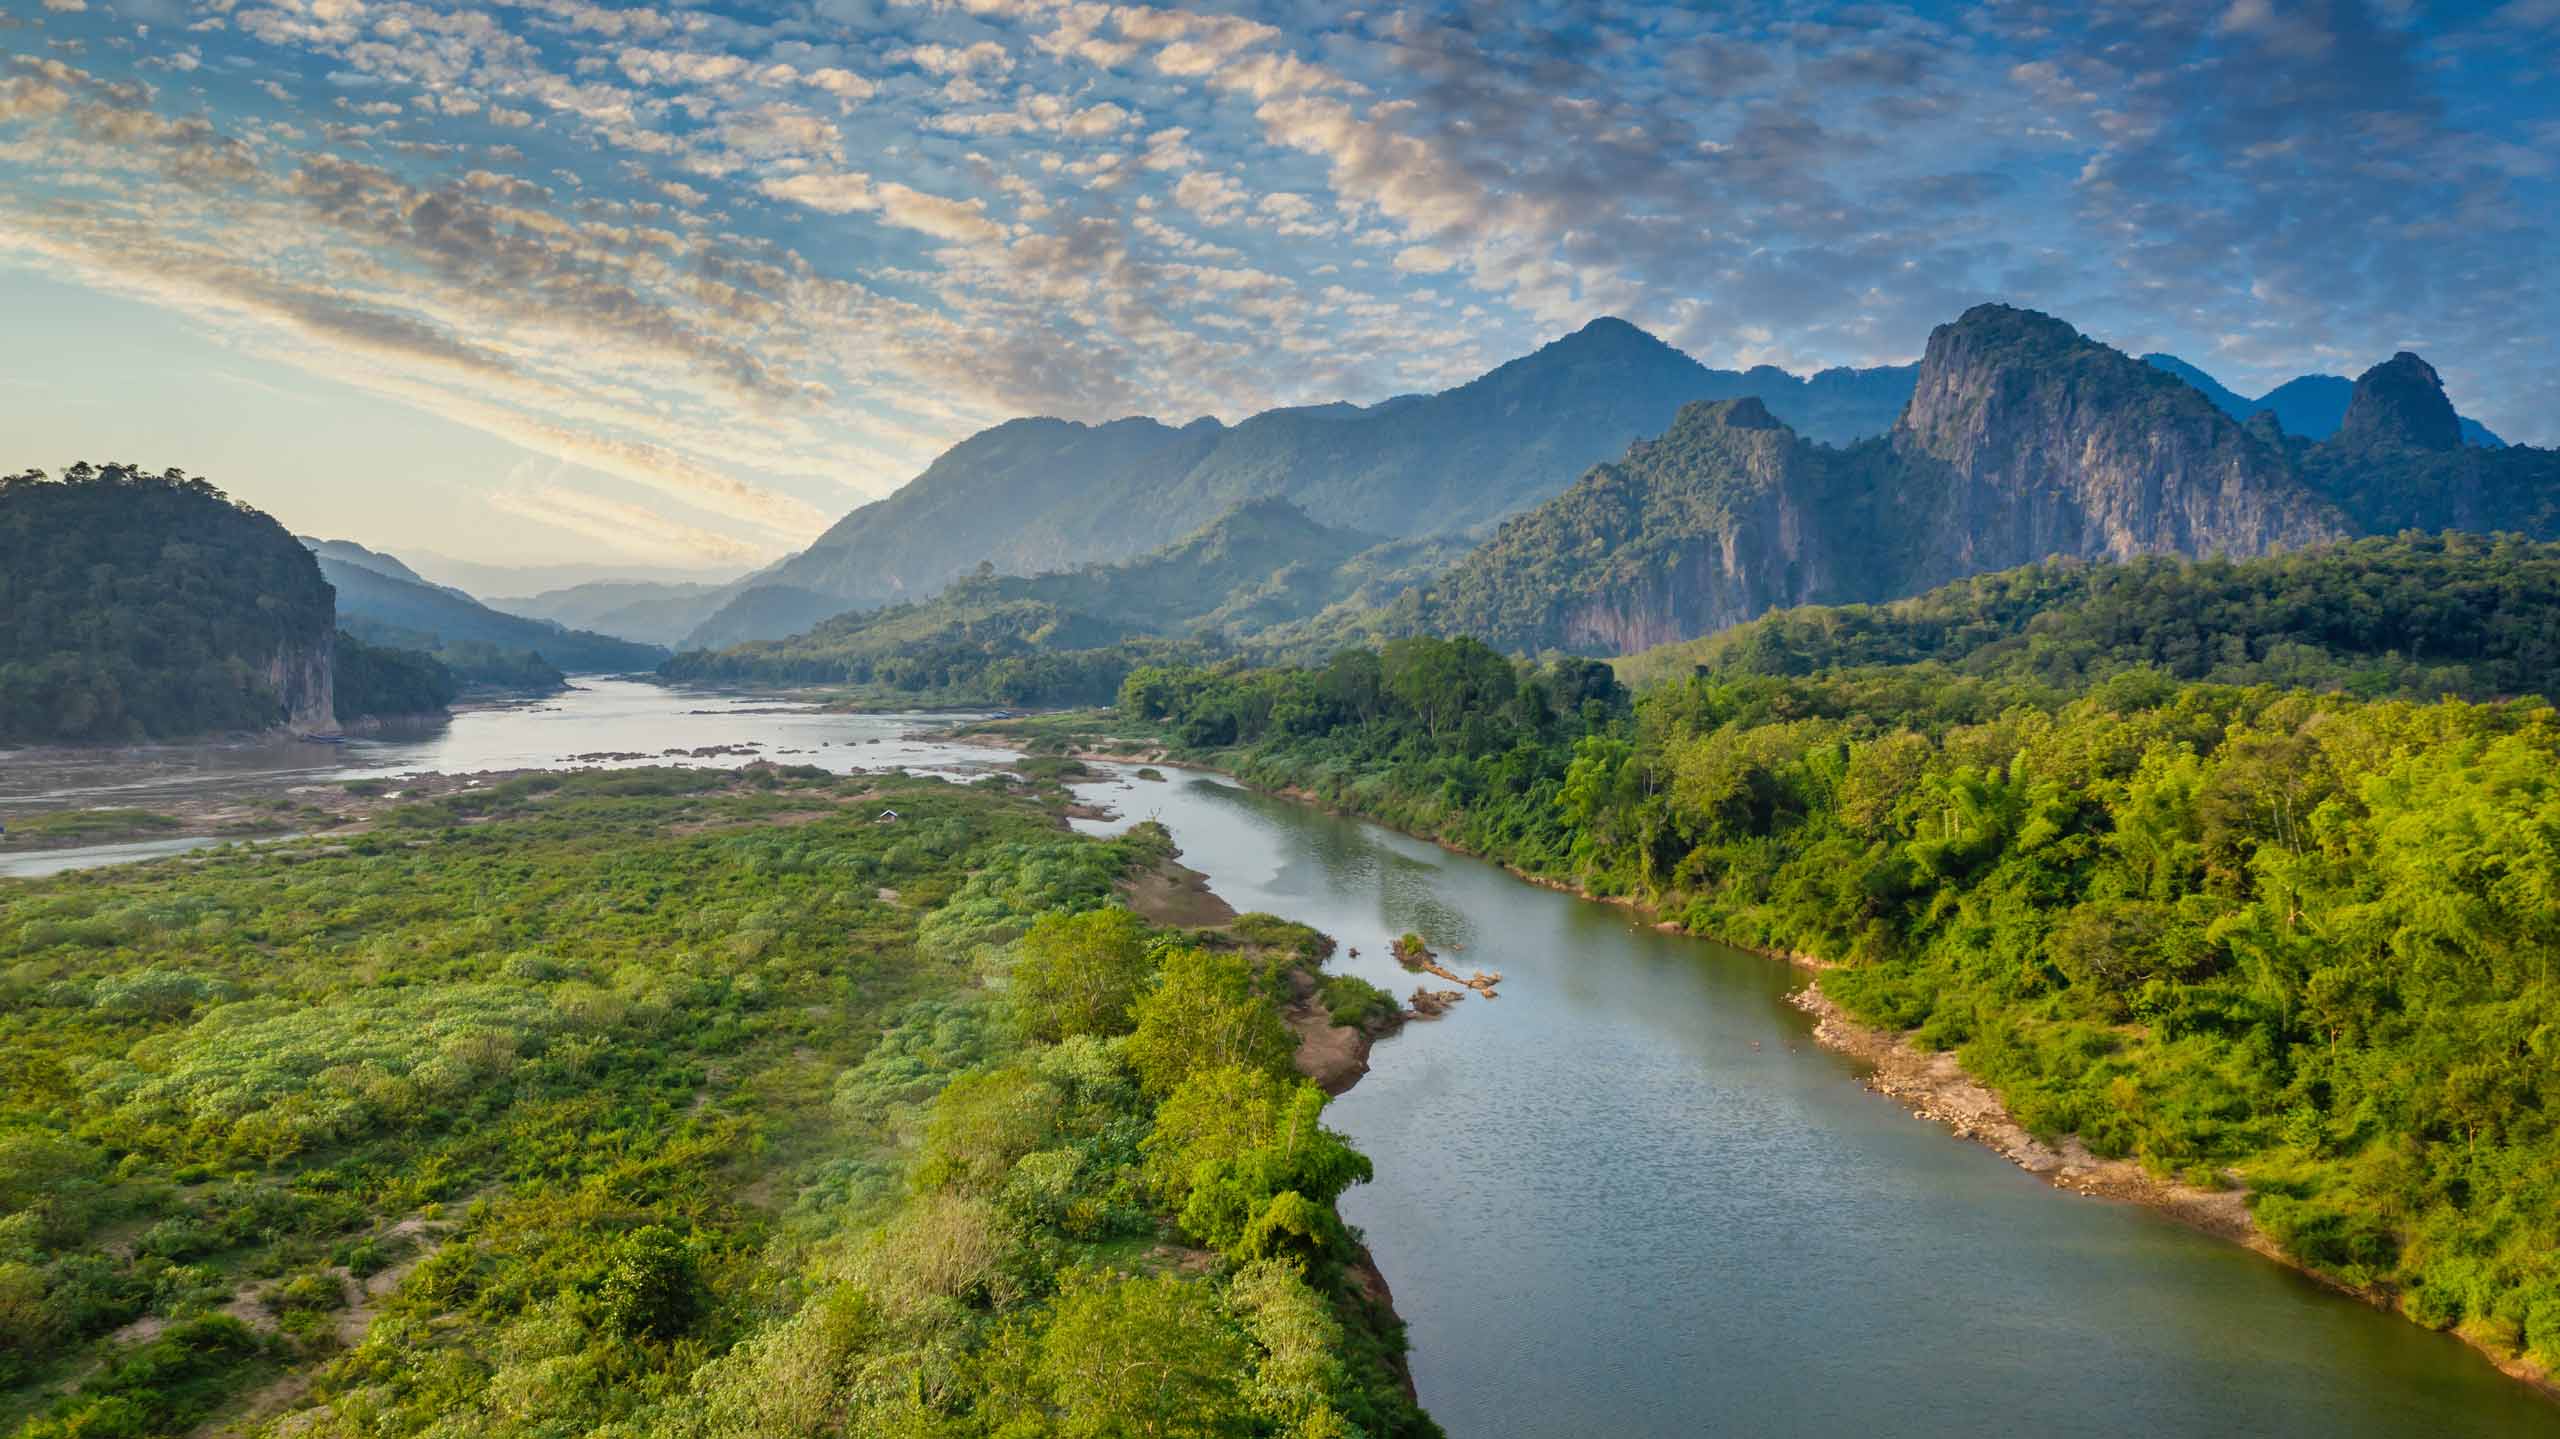 View of Mekong river near Luang Prabang in Laos